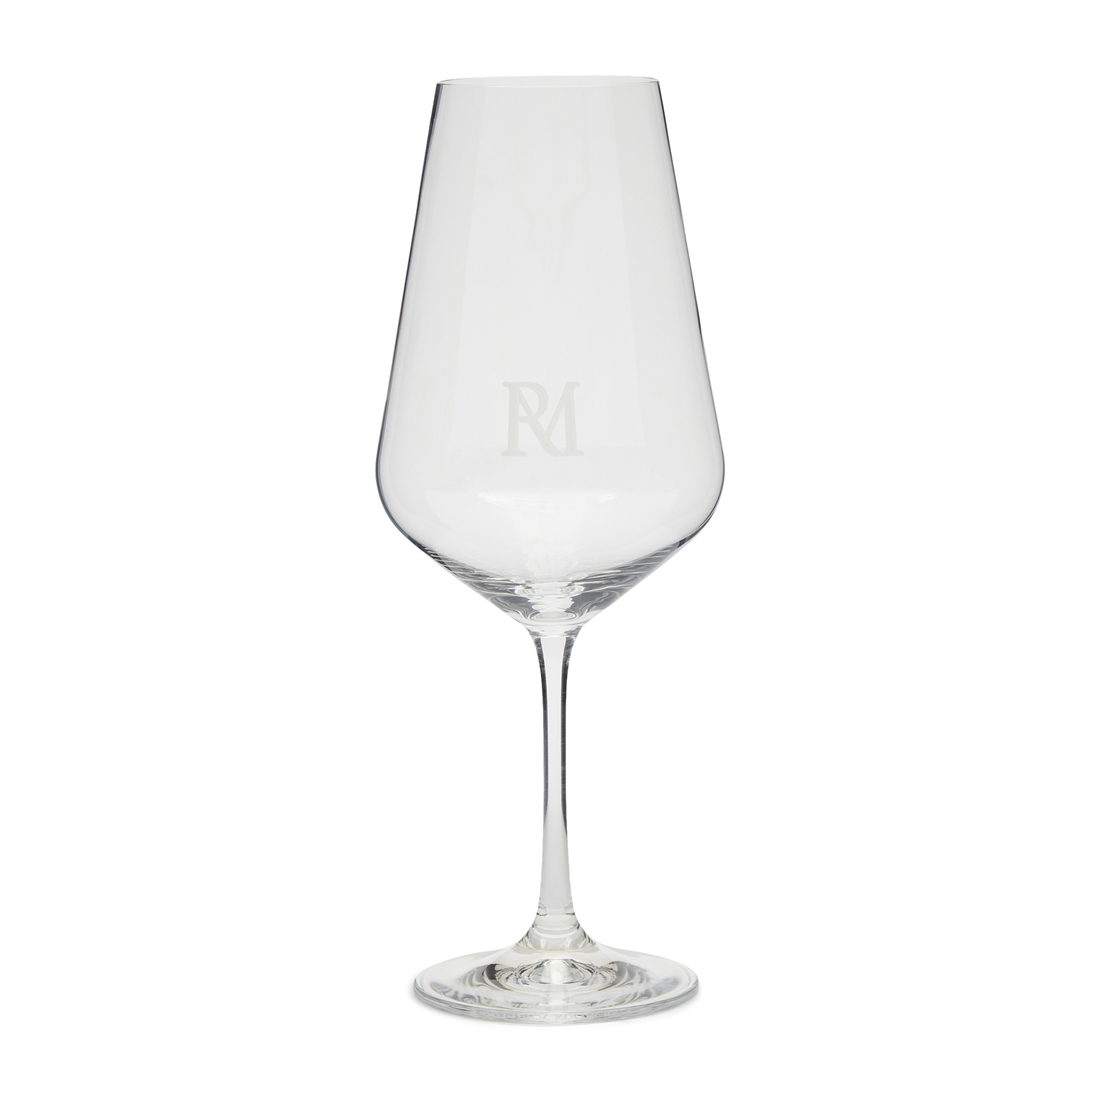 Riviera Maison Wijnglas - RM Monogram Wine Glass - Transparant